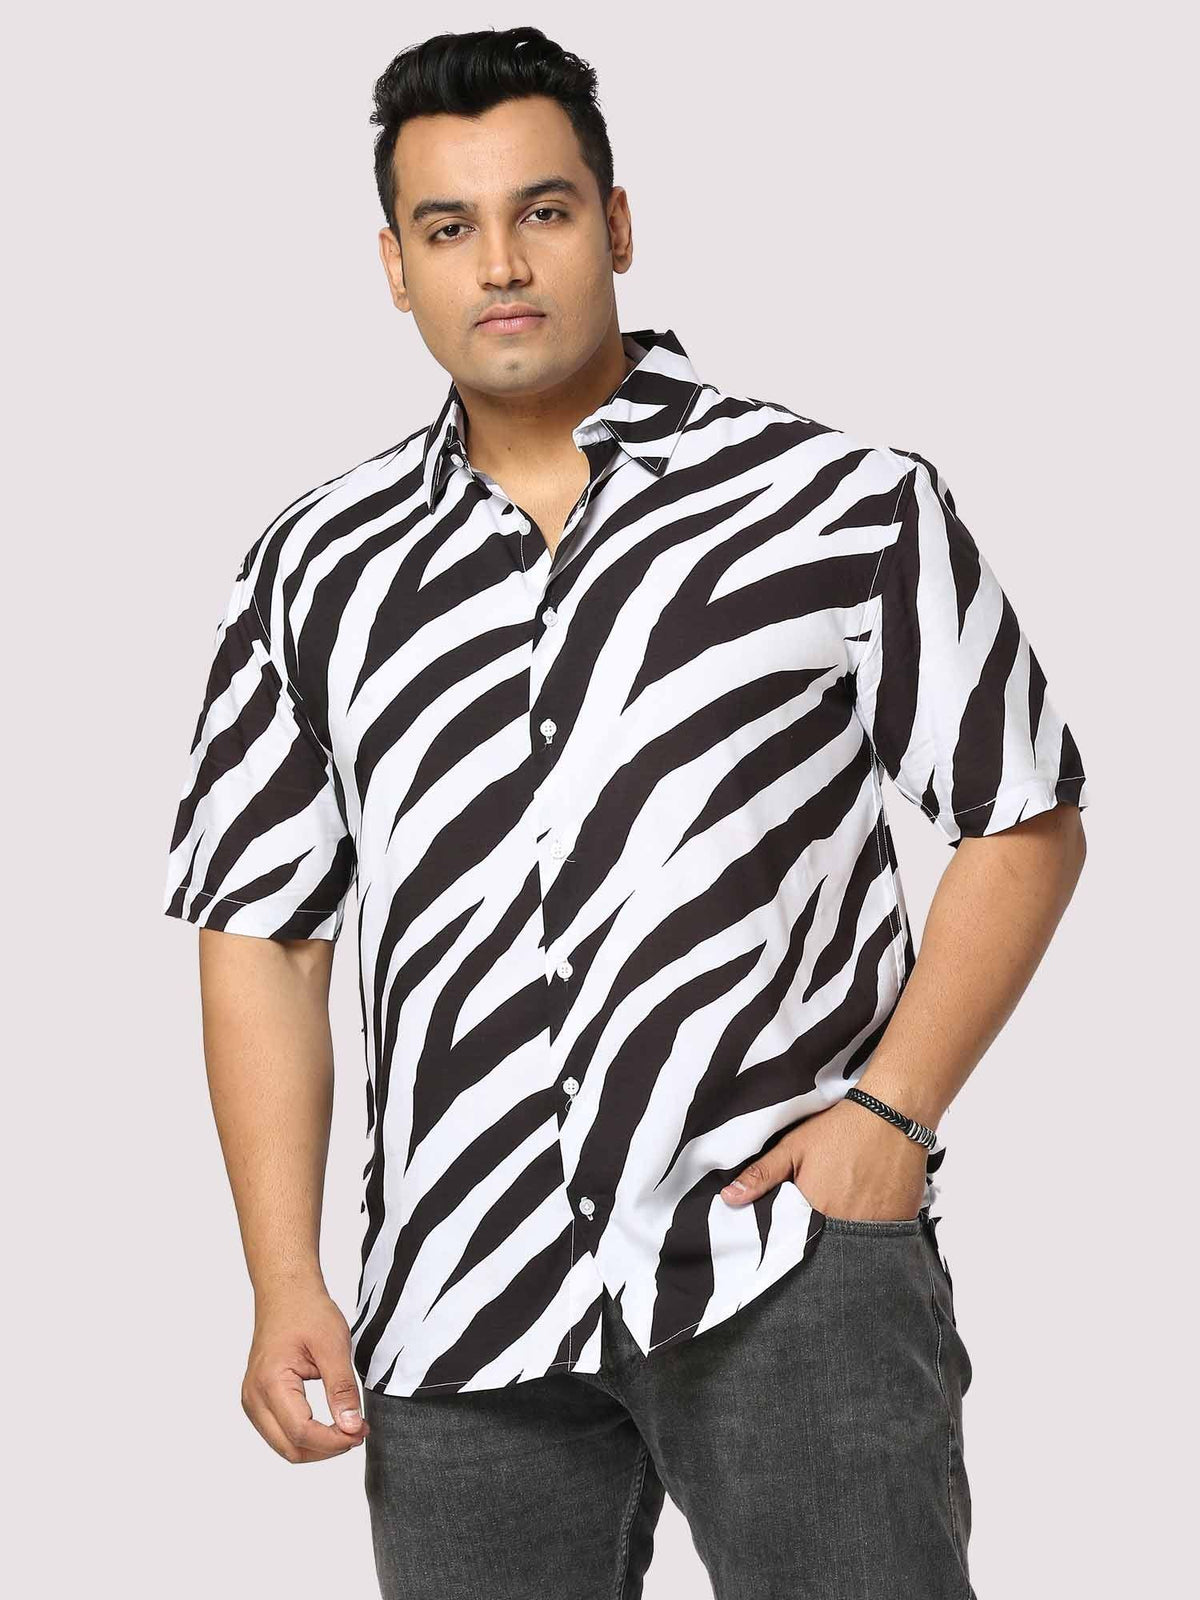 Stripe Digital Printed Half Shirt Men's Plus Size - Guniaa Fashions